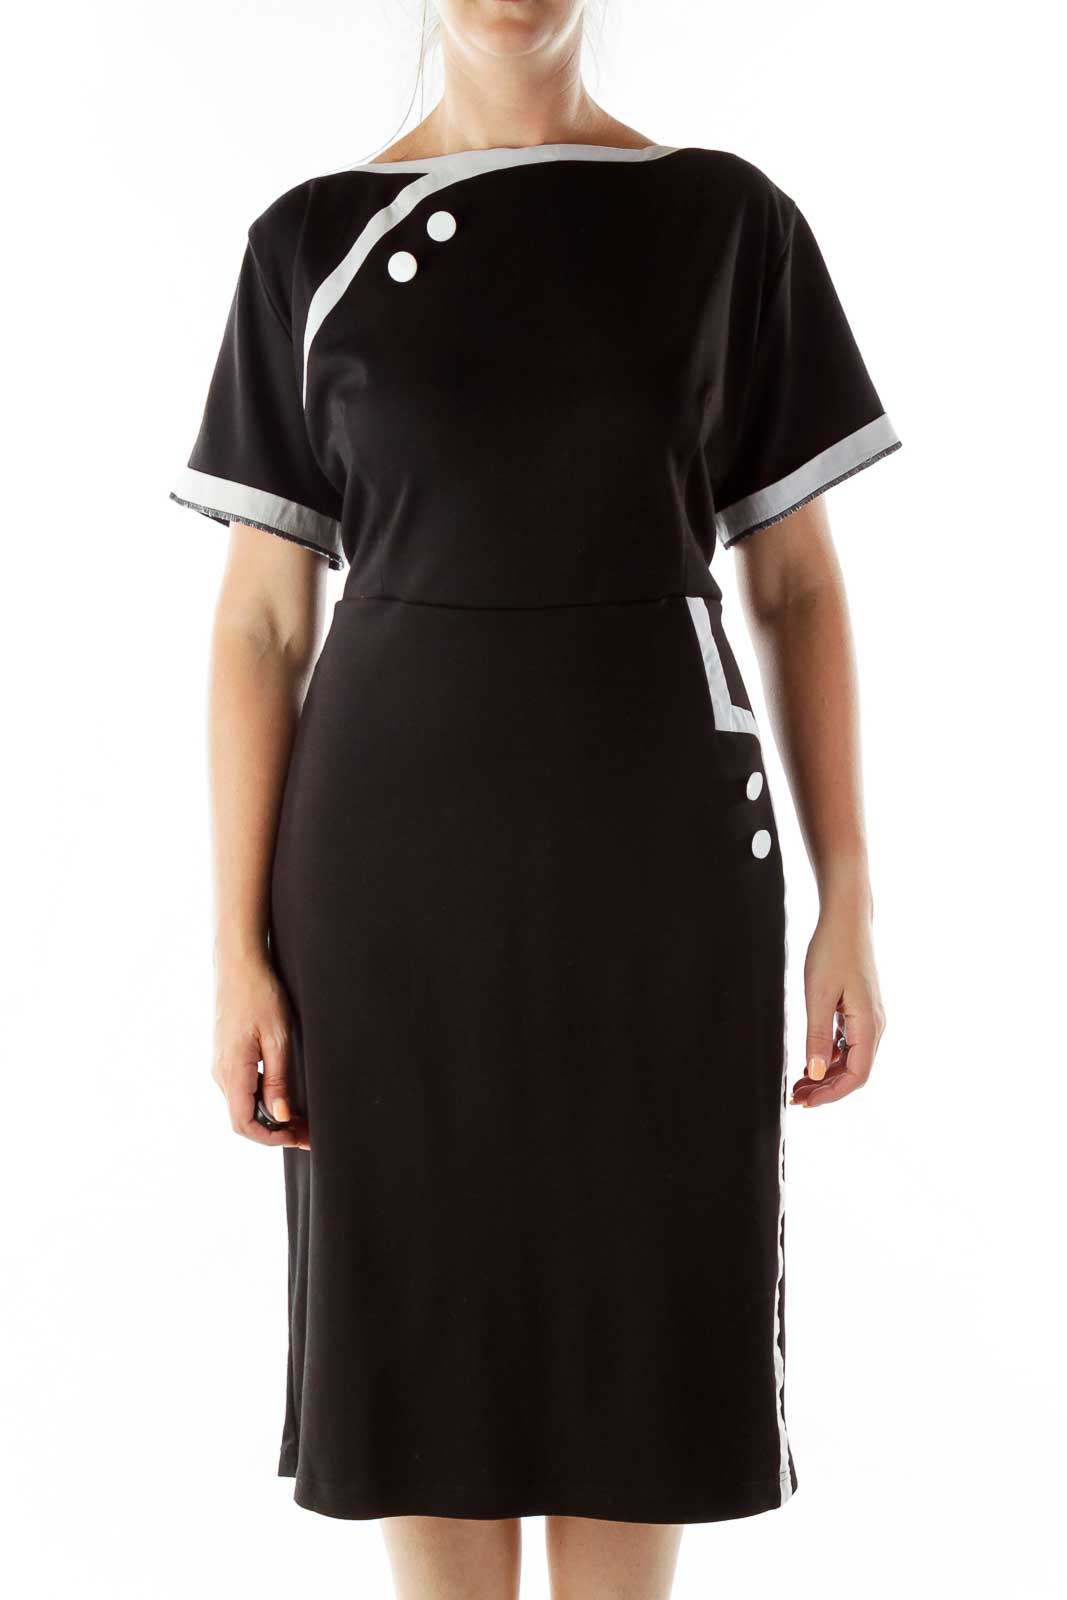 Black White Buttoned Vintage A-Line Dress Front